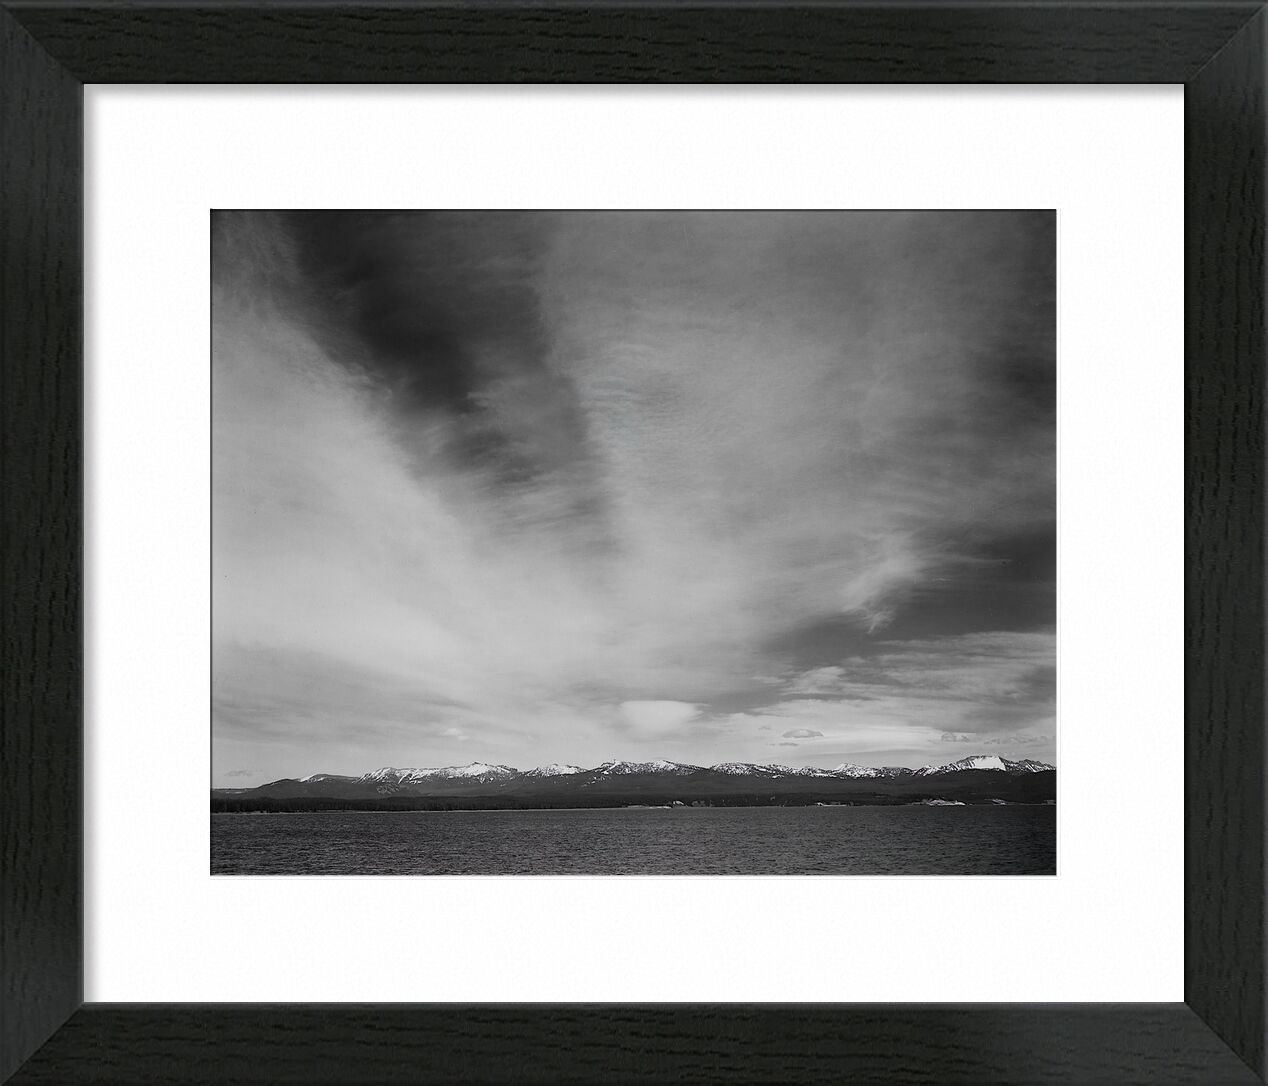 Wider Strip Of Mountains "Yellowstone Lake" - Ansel Adams desde Bellas artes, Prodi Art, ANSEL ADAMS, Yellowstone, montañas, cielo, blanco y negro